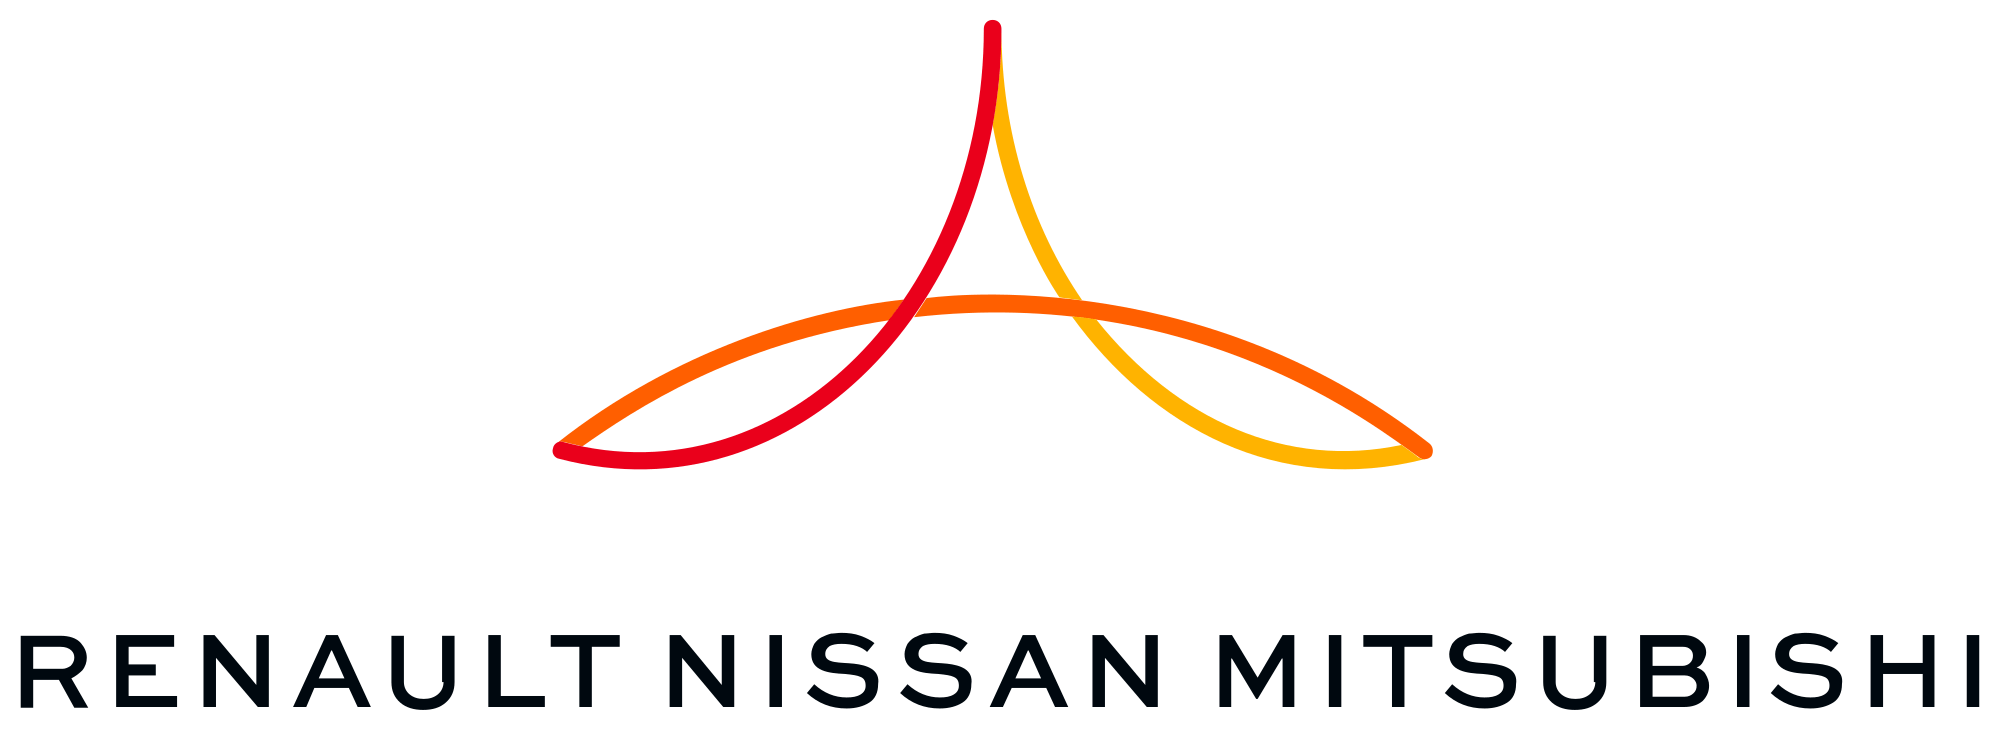 Renault-Nissan Mitsubishi Logo - Renault Nissan Mitsubishi Alliance Logo.svg